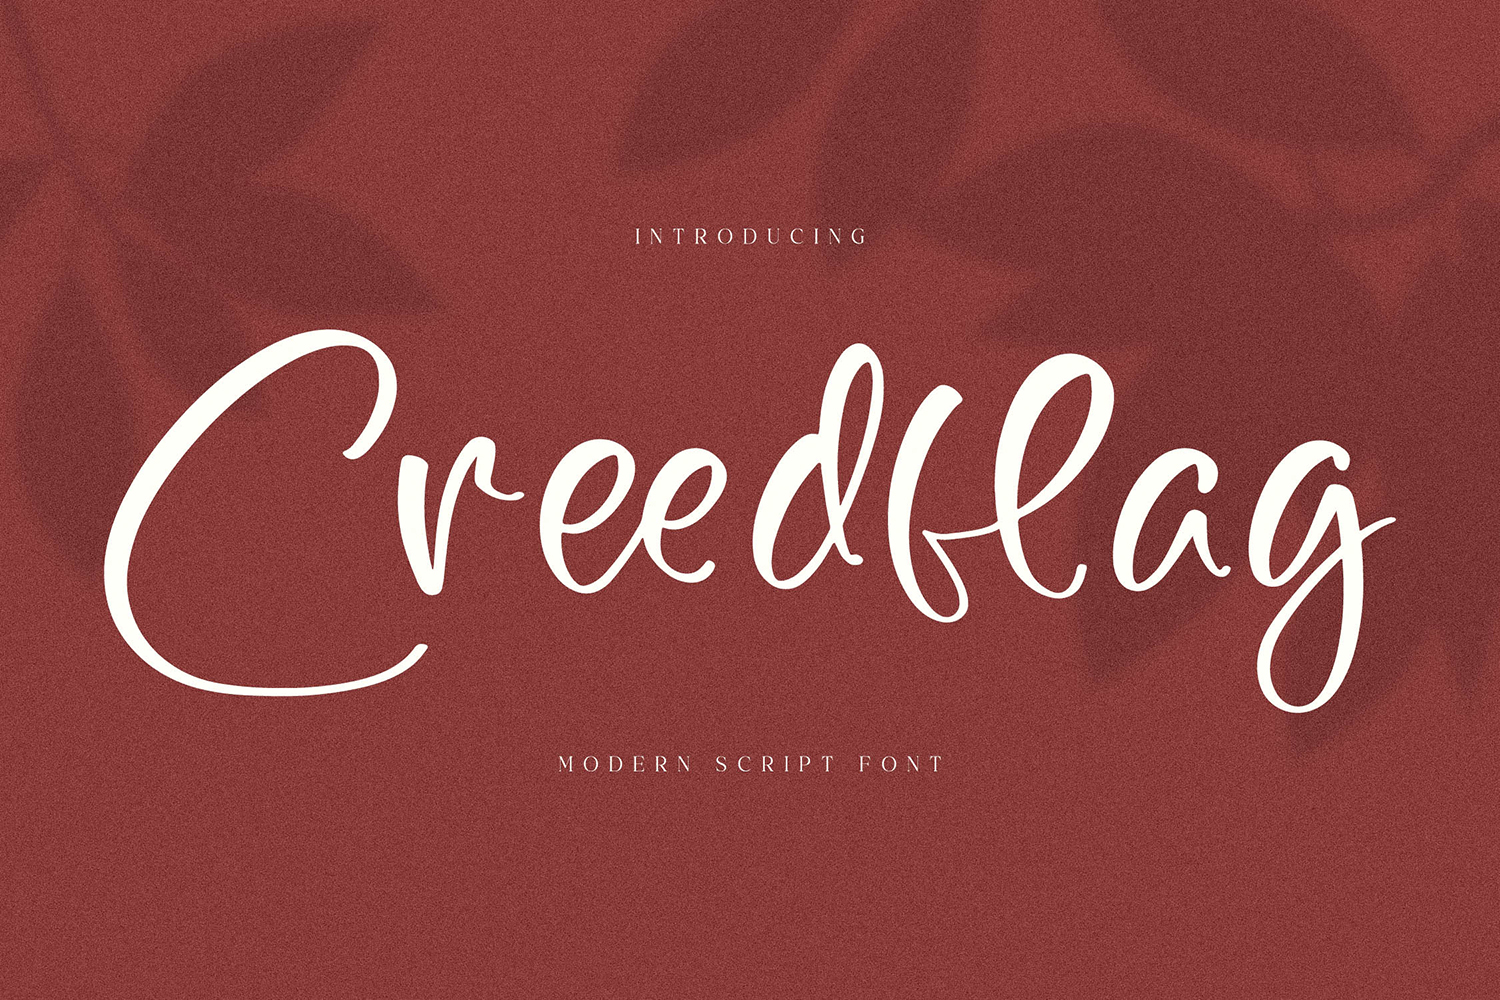 Creedflag Free Font